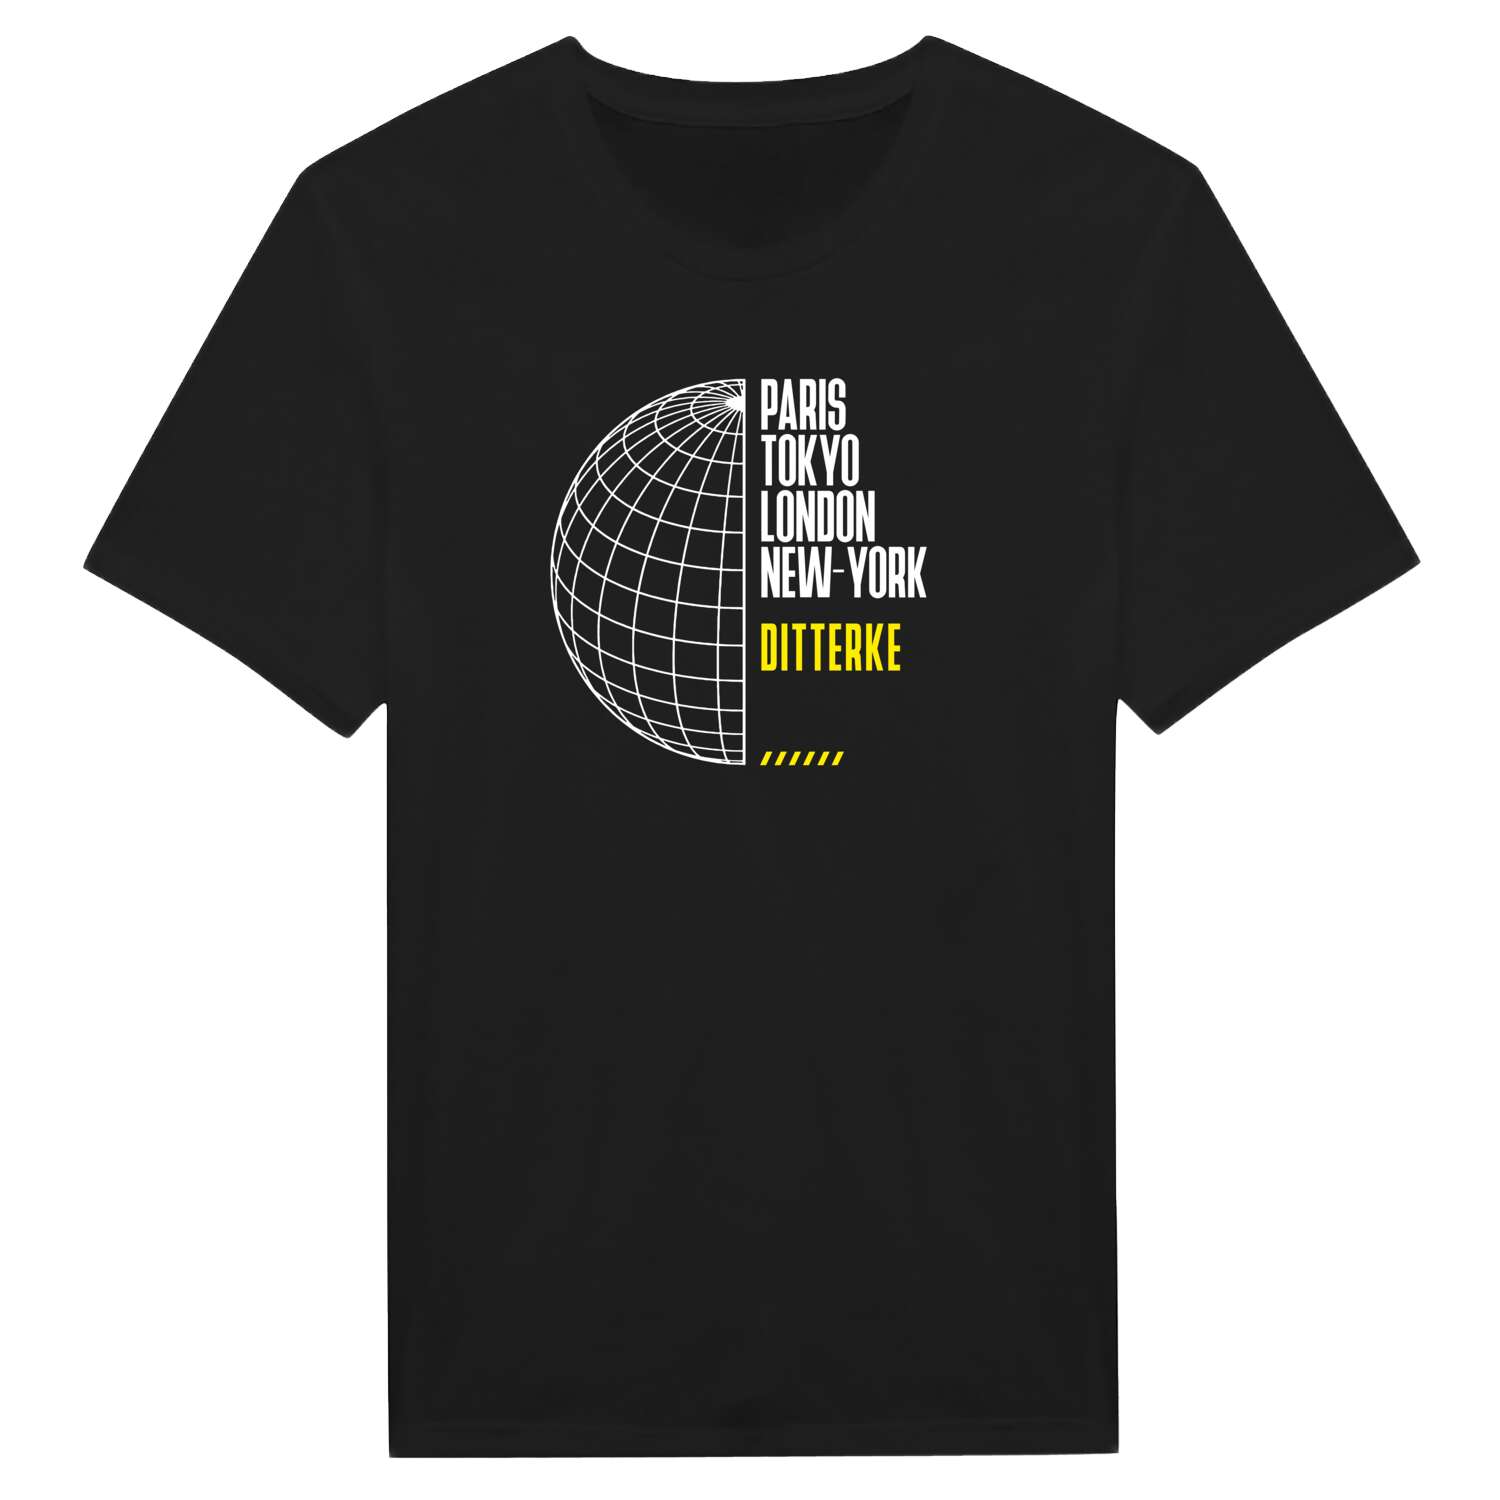 Ditterke T-Shirt »Paris Tokyo London«